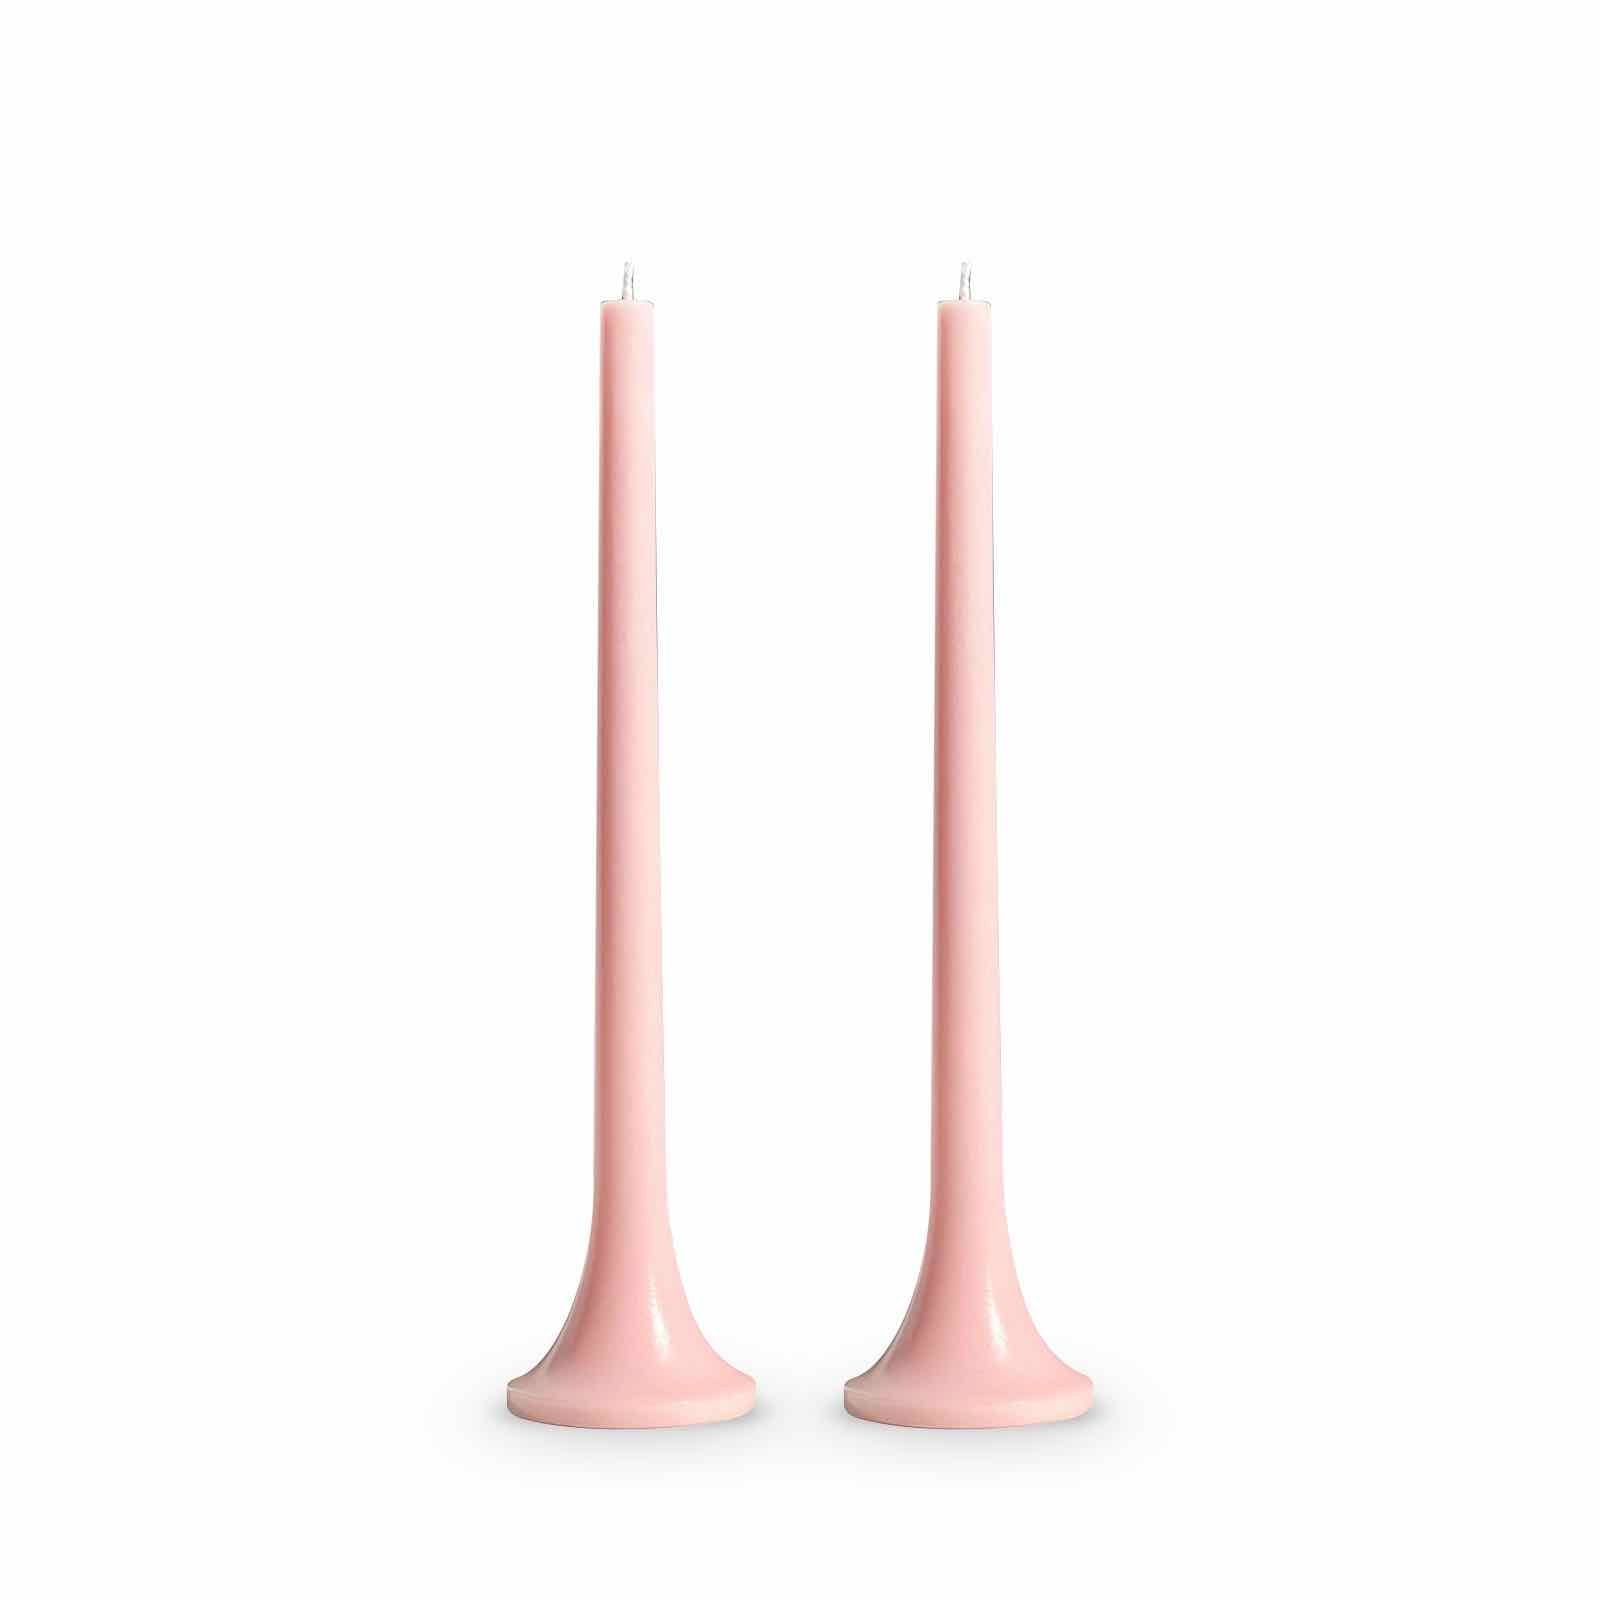 Pink wedding candles